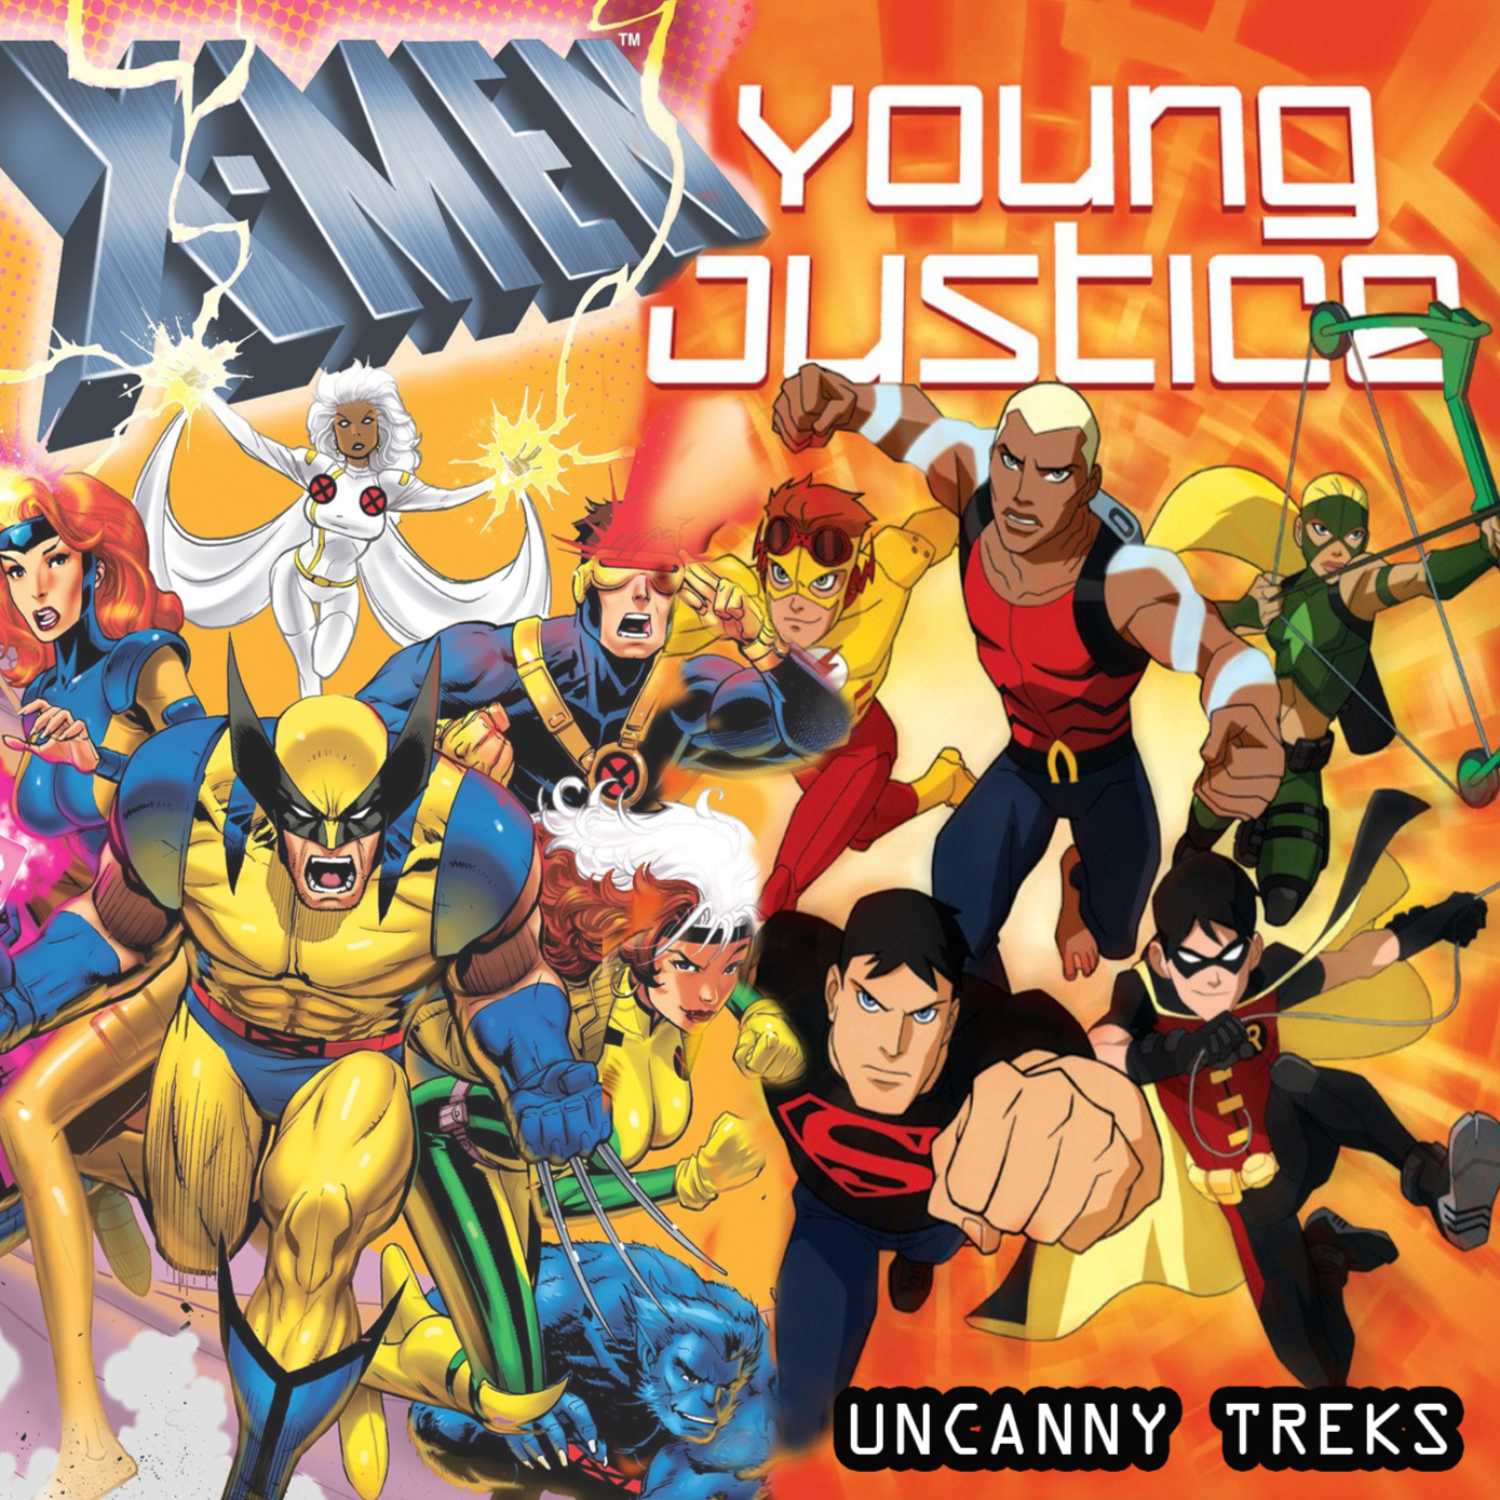 X-Men 92 vs. Young Justice S1E2 (Unlocked Patreon Content)